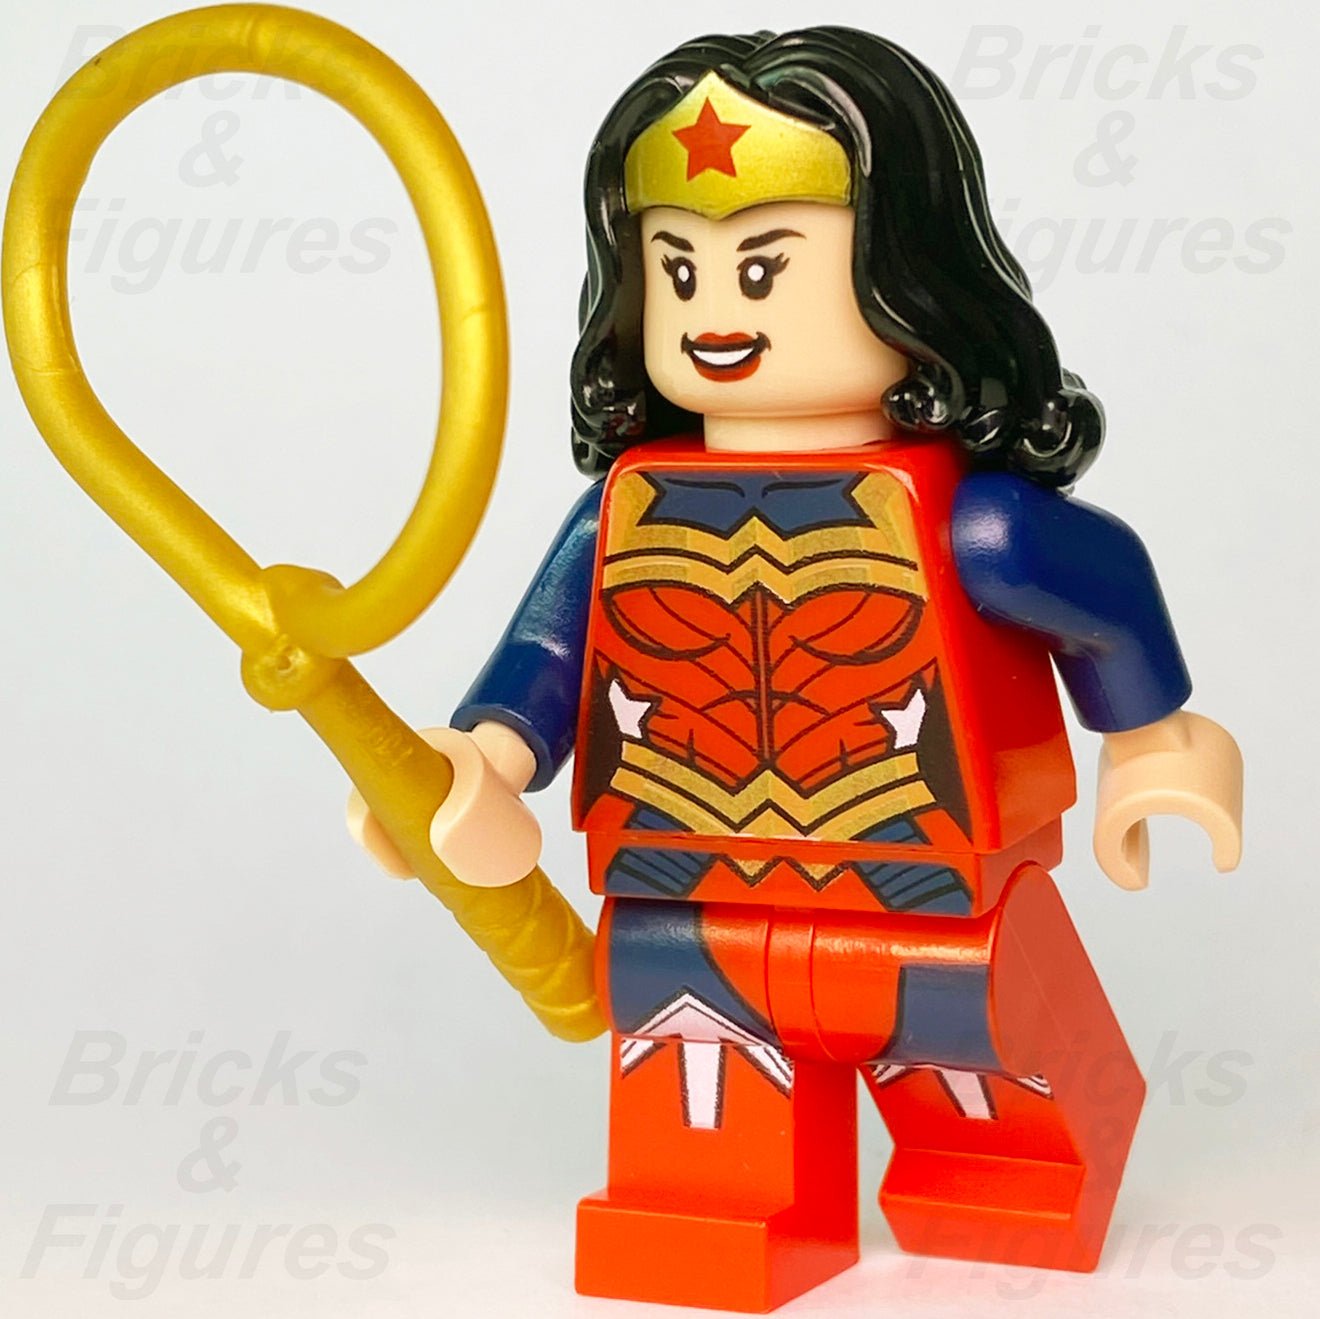 LEGO Wonder Woman Minifigures